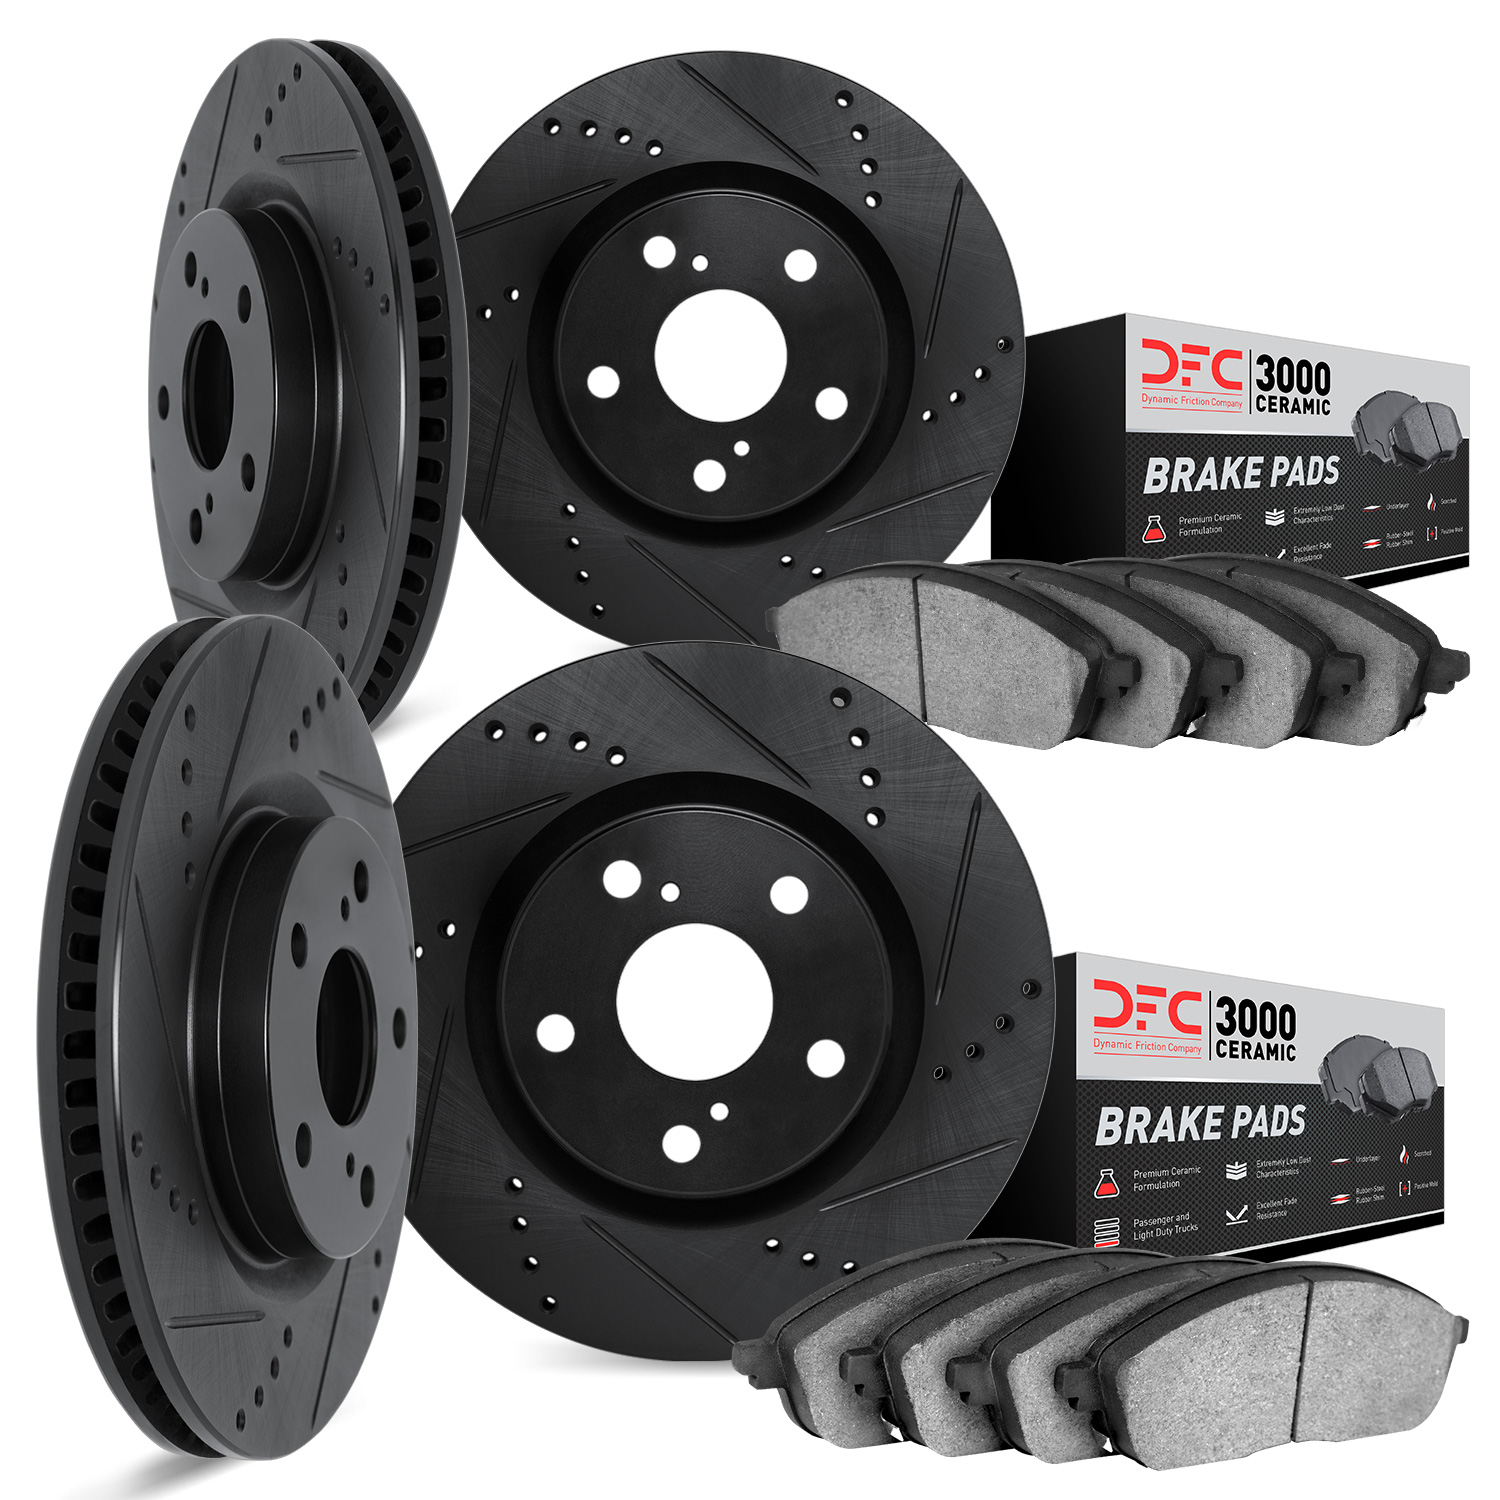 8304-13047 Drilled/Slotted Brake Rotors with 3000-Series Ceramic Brake Pads Kit [Black], Fits Select Multiple Makes/Models, Posi